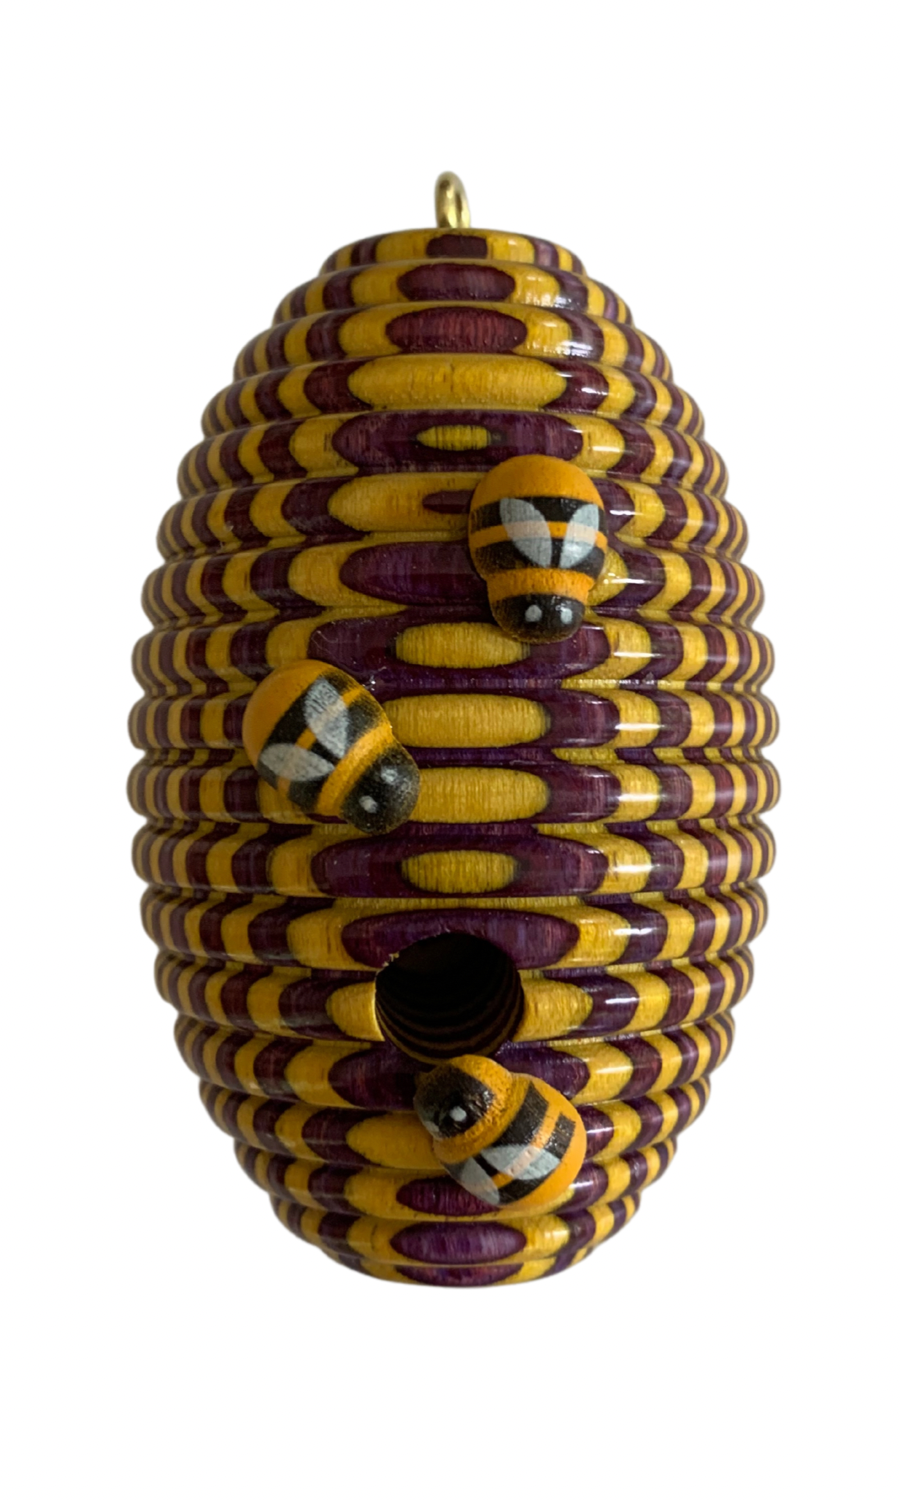 Beehive Ornament - Yellow Jacket